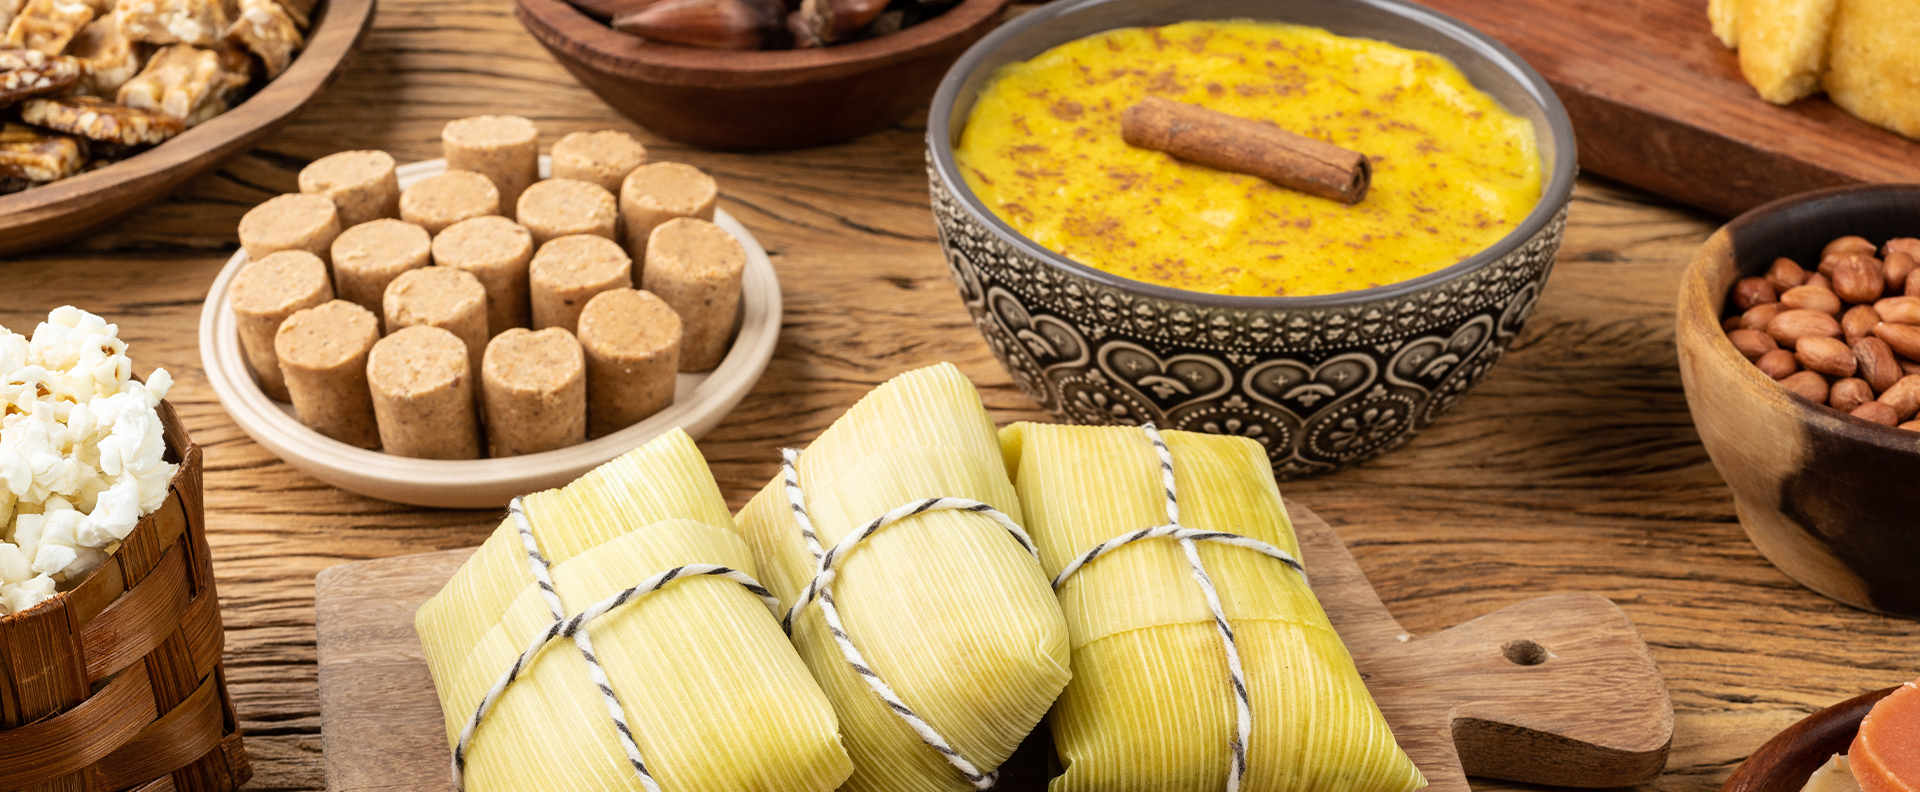 A panela certa: 6 deliciosas comidas típicas de Festa Junina